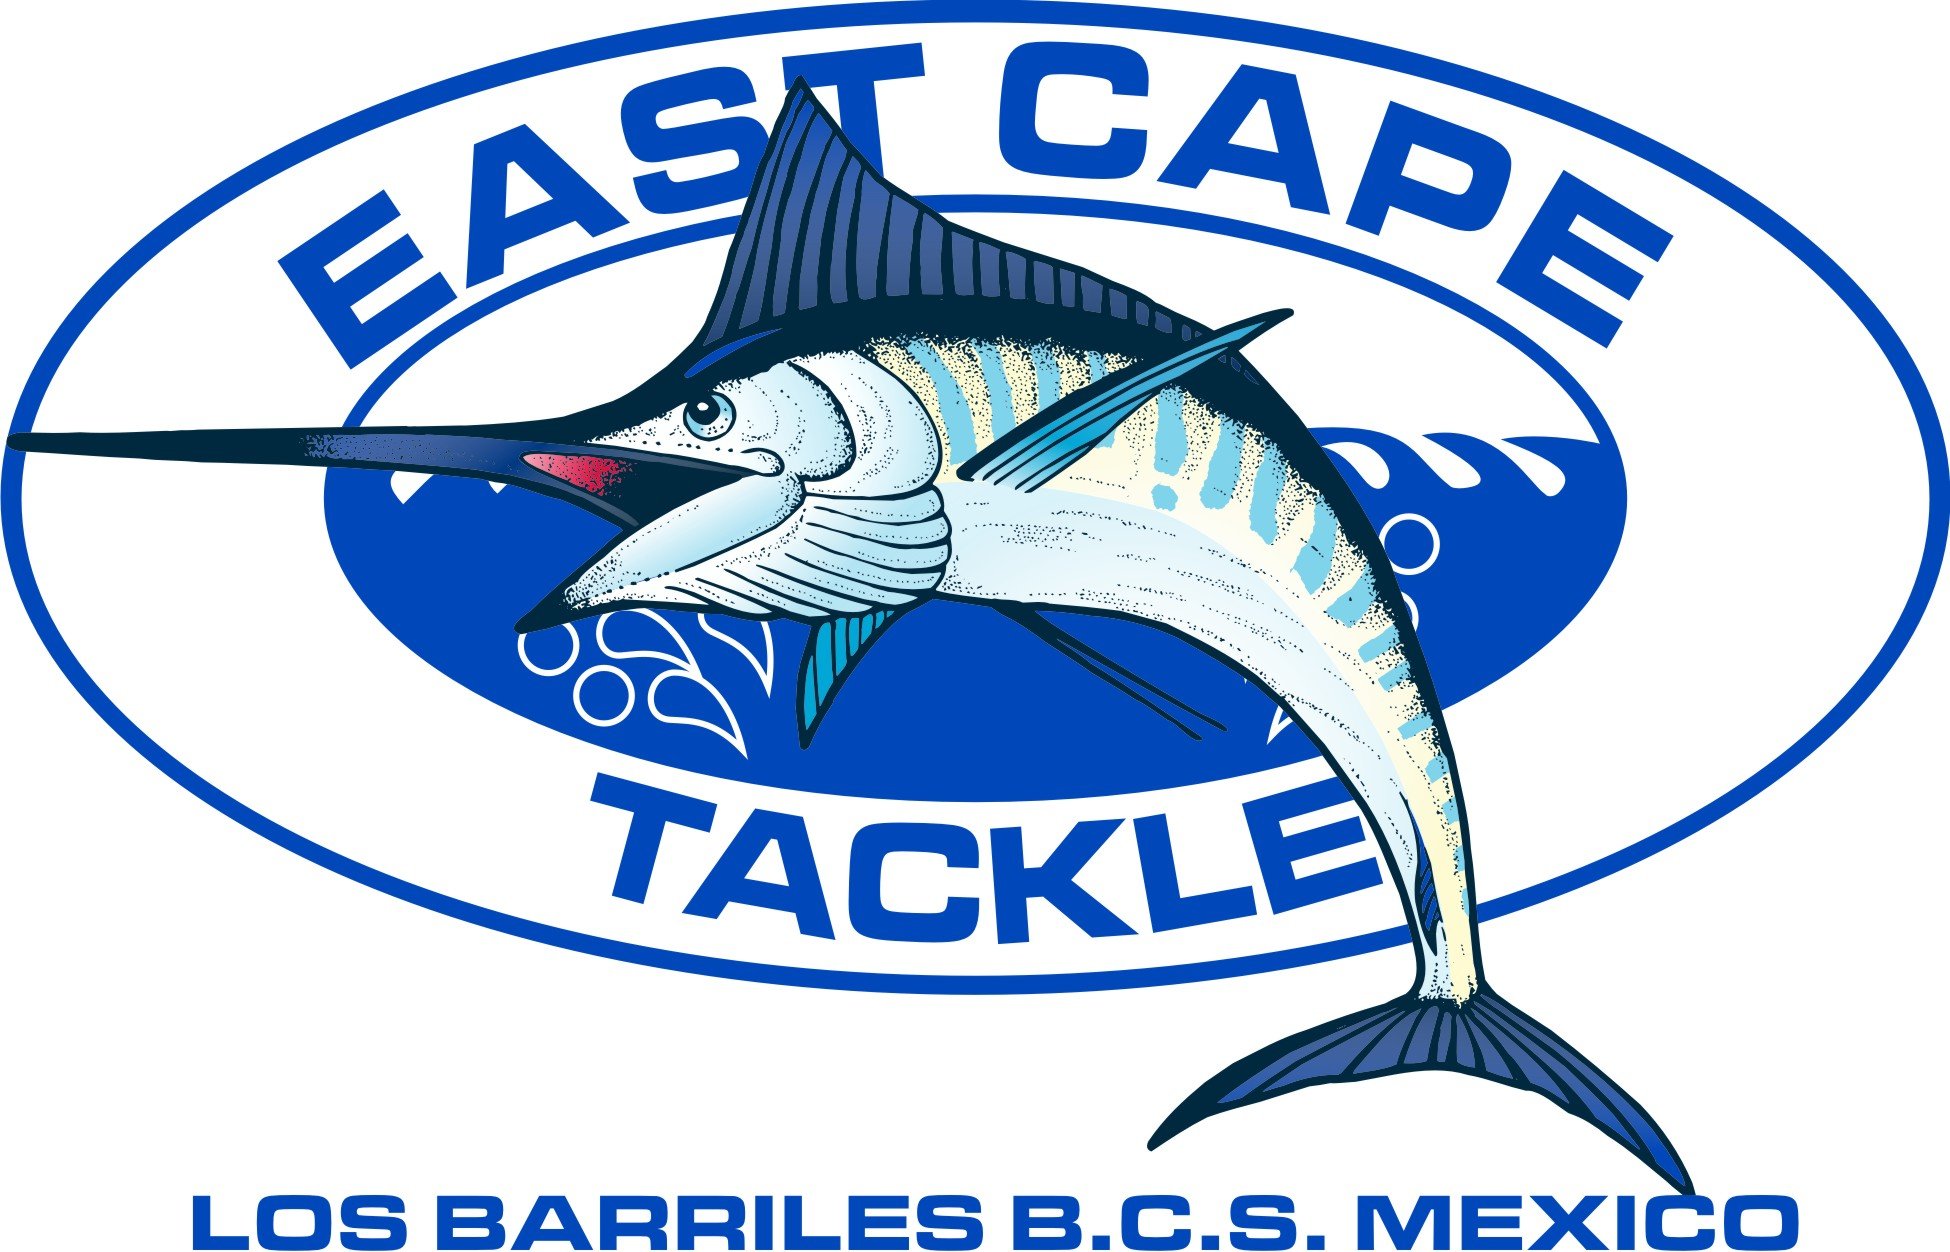 East Cape Tackle logo.jpg